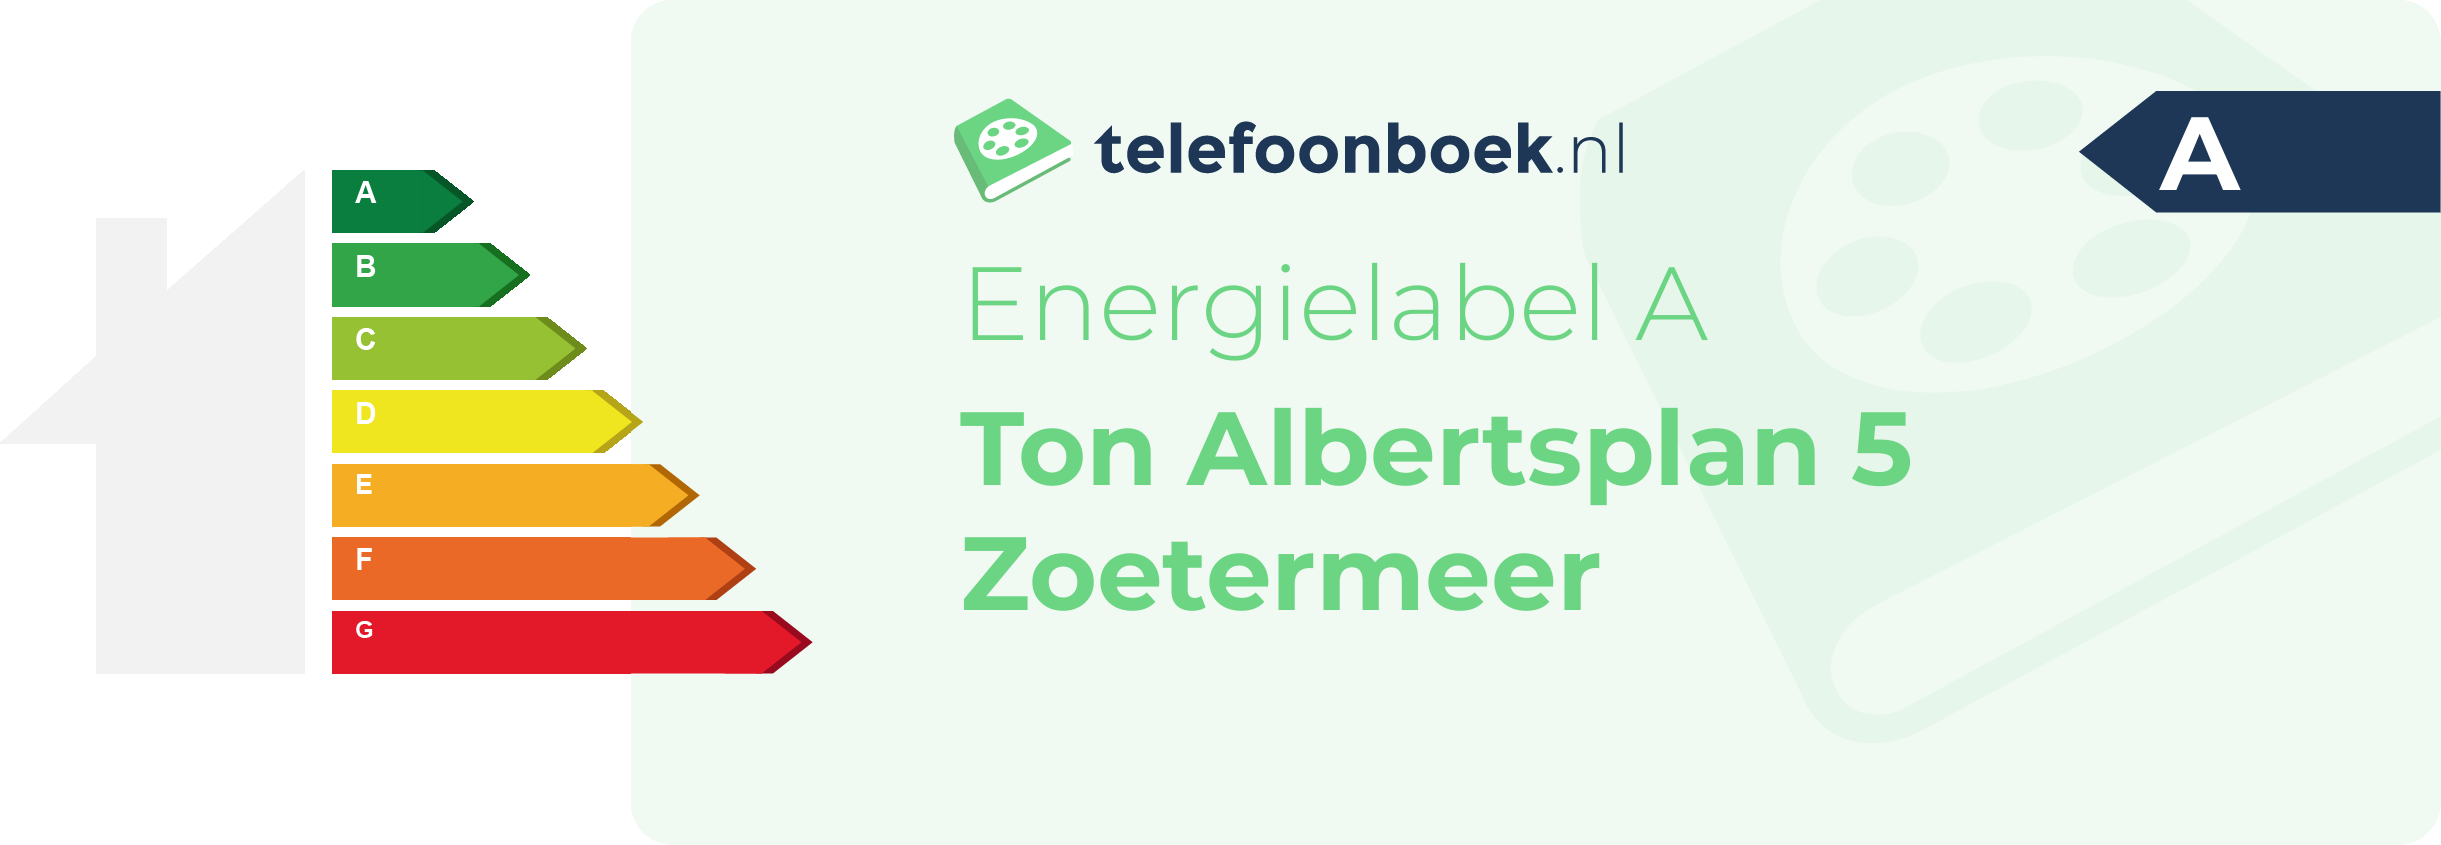 Energielabel Ton Albertsplan 5 Zoetermeer